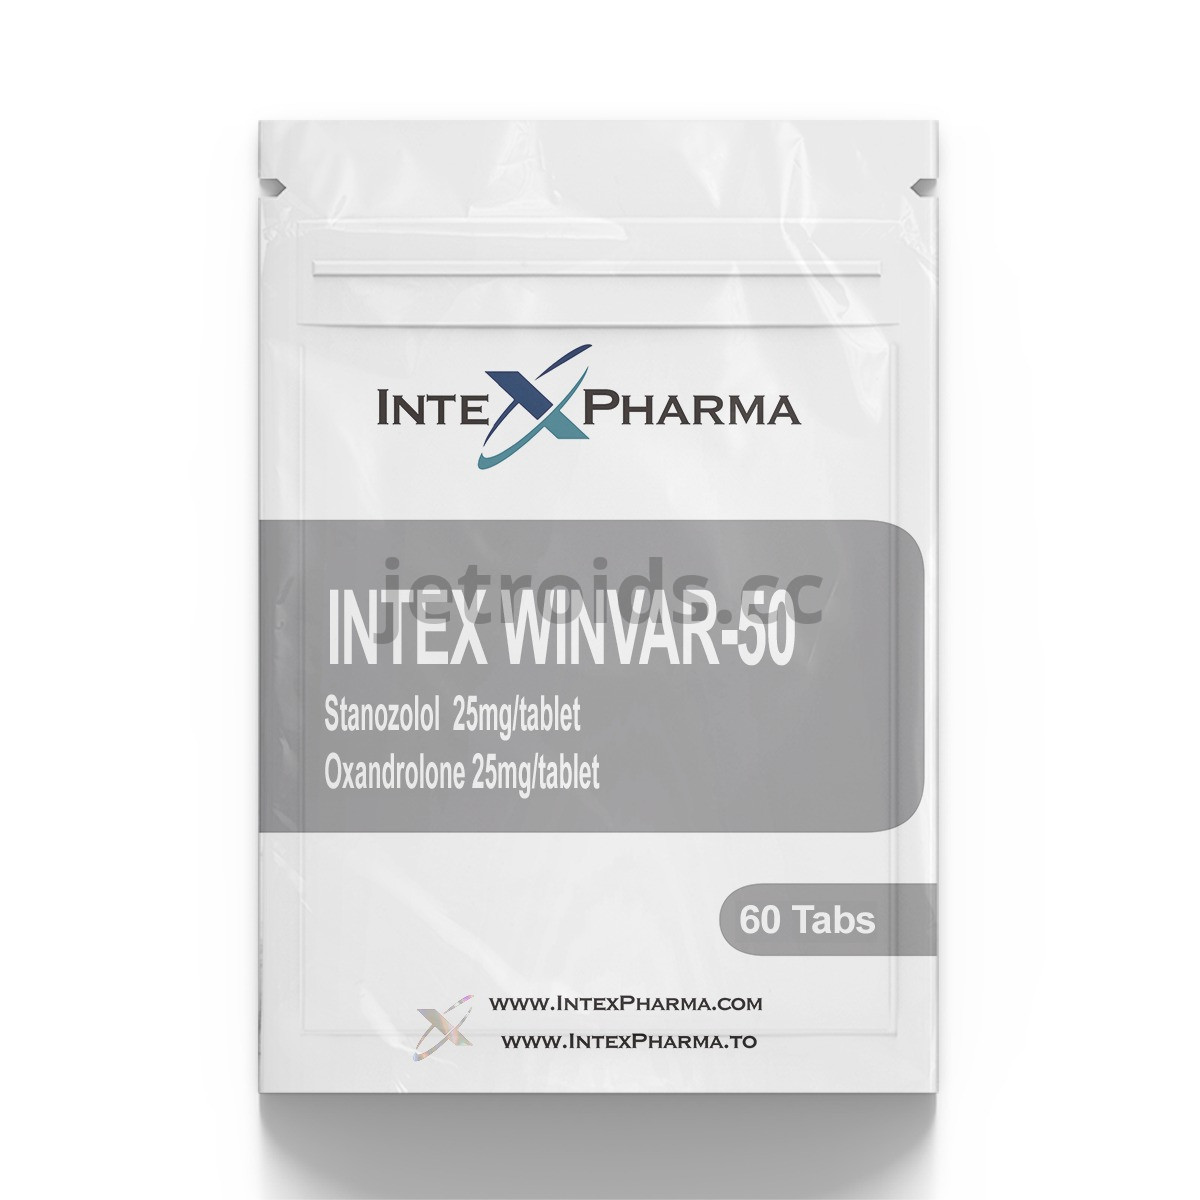 IntexPharma Intex Winvar-50 Product Info